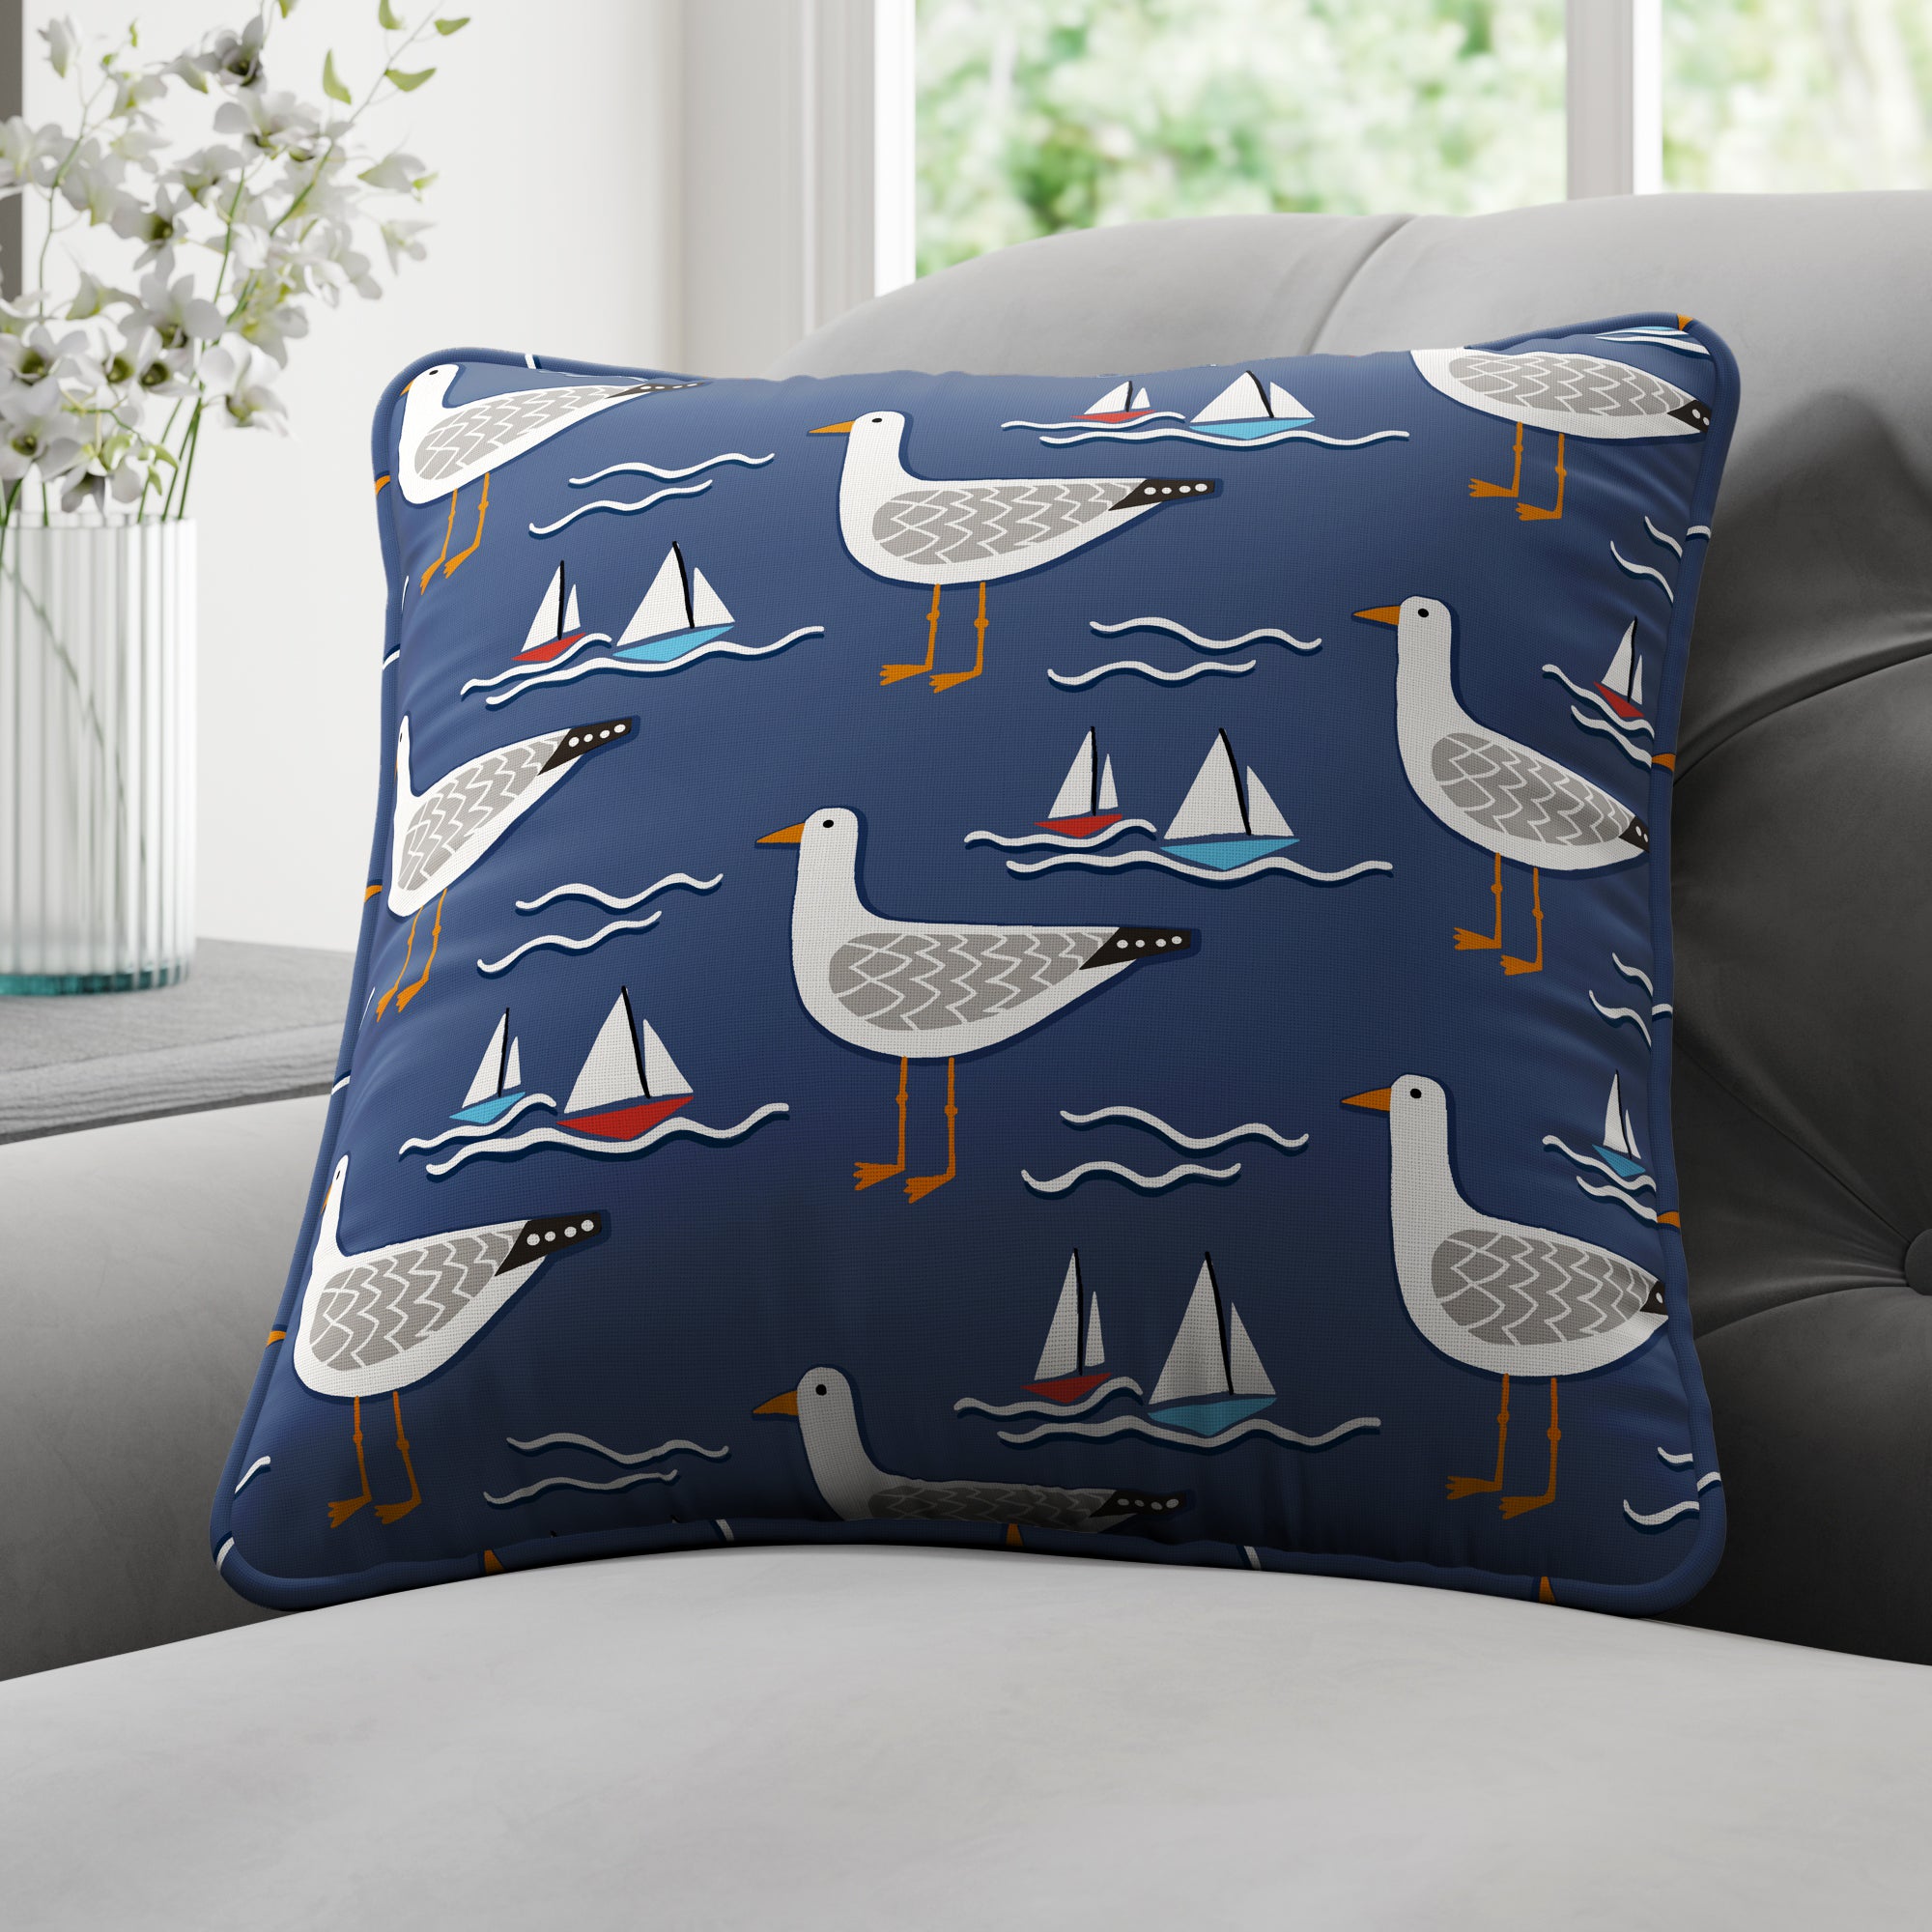 Coastal Gull Made to Order Cushion Cover Gull Navy